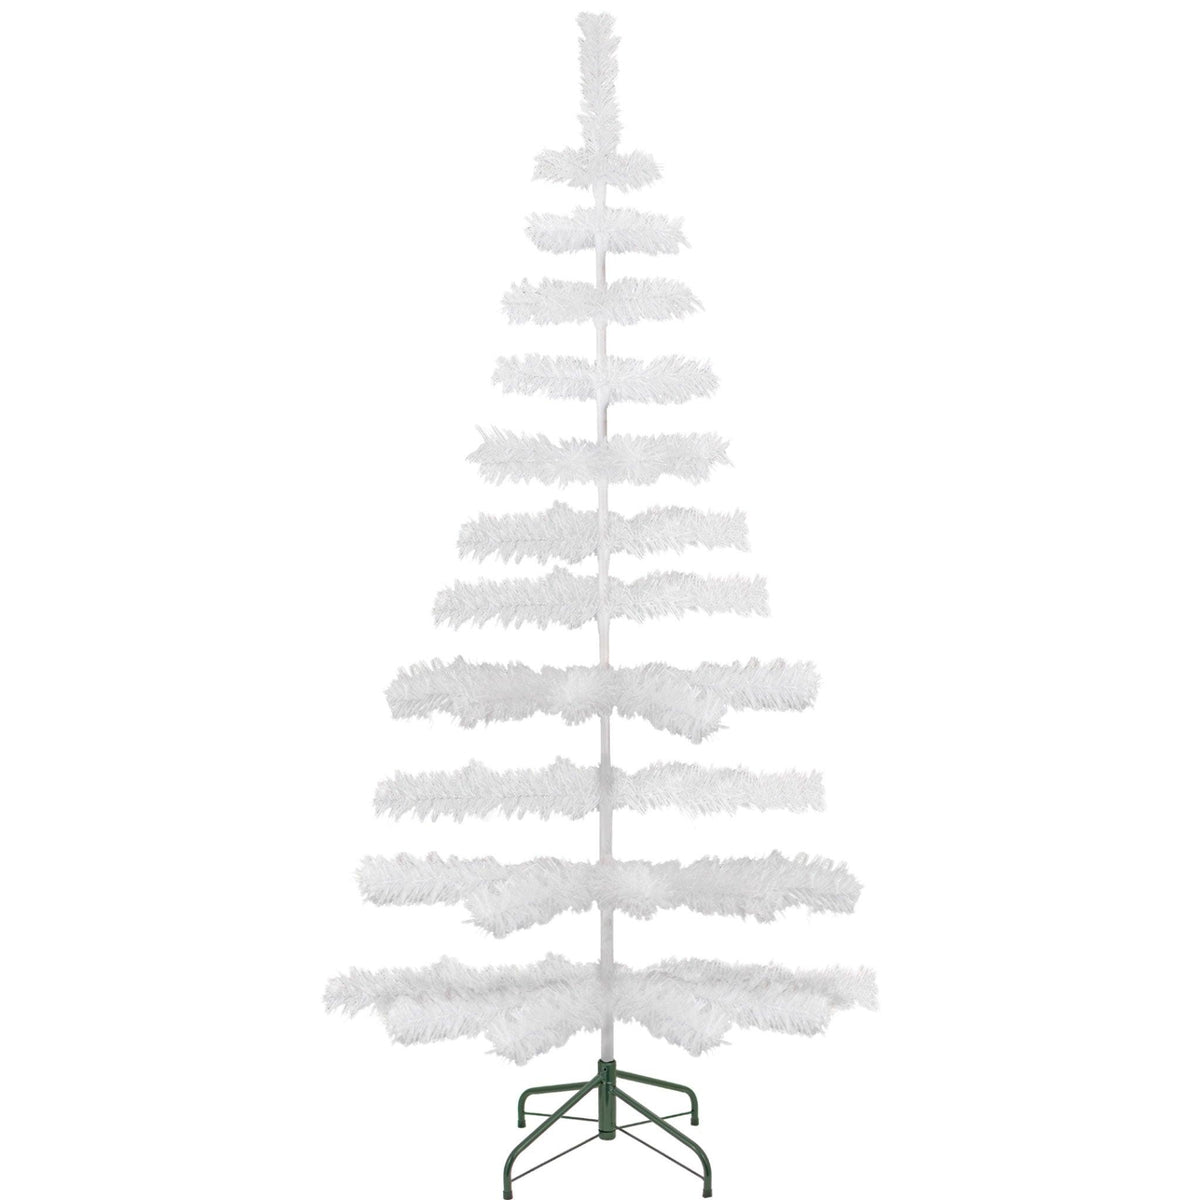 Lee Display's 5ft White Tinsel Christmas Tree on sale now at leedisplay.com